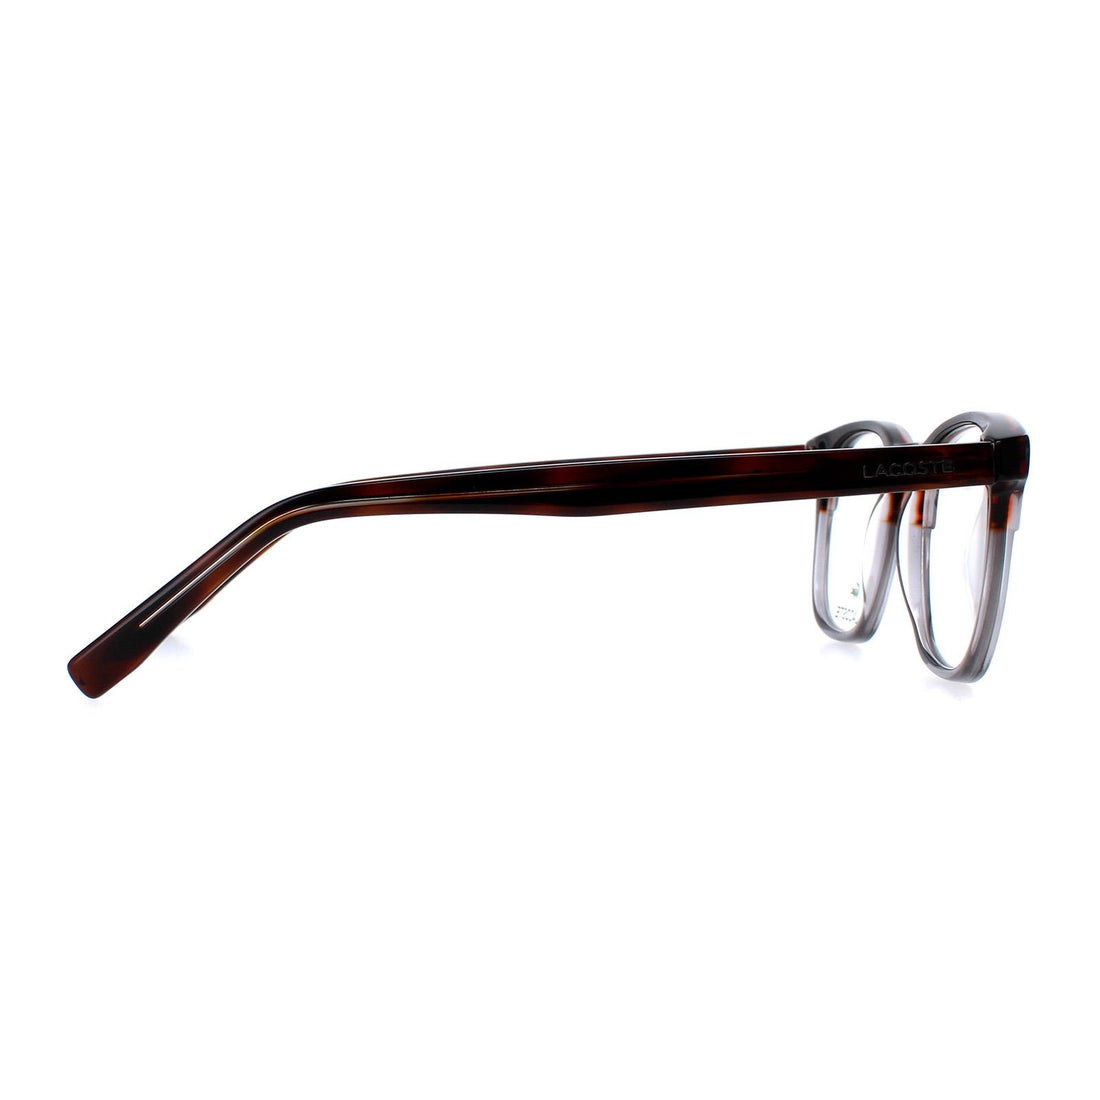 Lacoste Glasses Frames L2832 210 Brown Grey Men Women